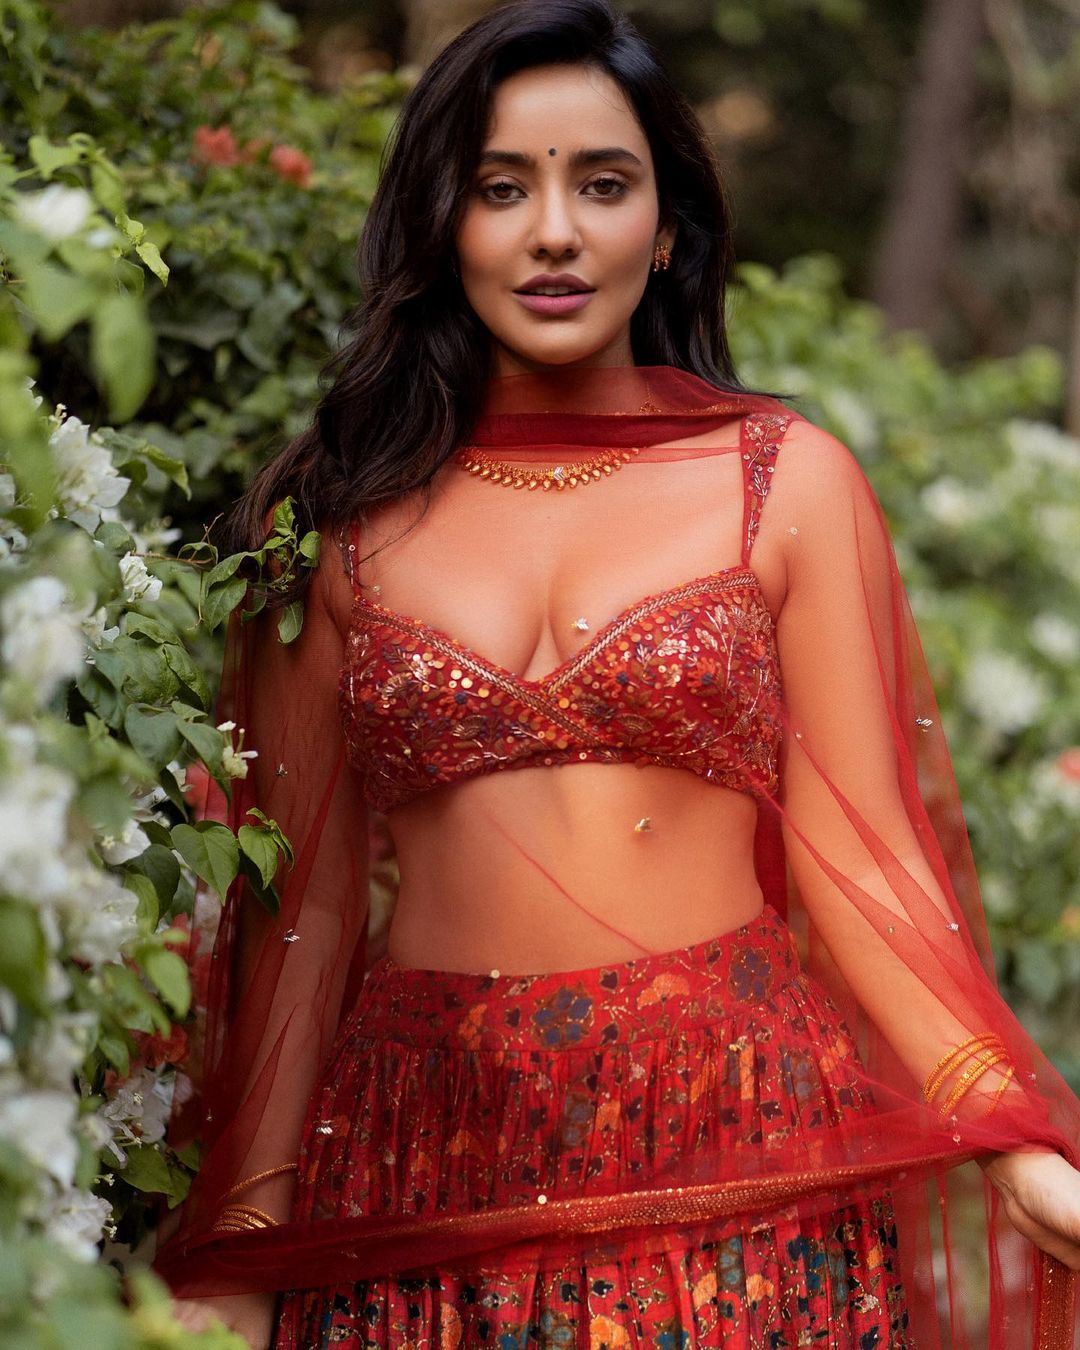 Neha Sharma is raising temperatures in a bold blouse, lehenga and sheer dupatta